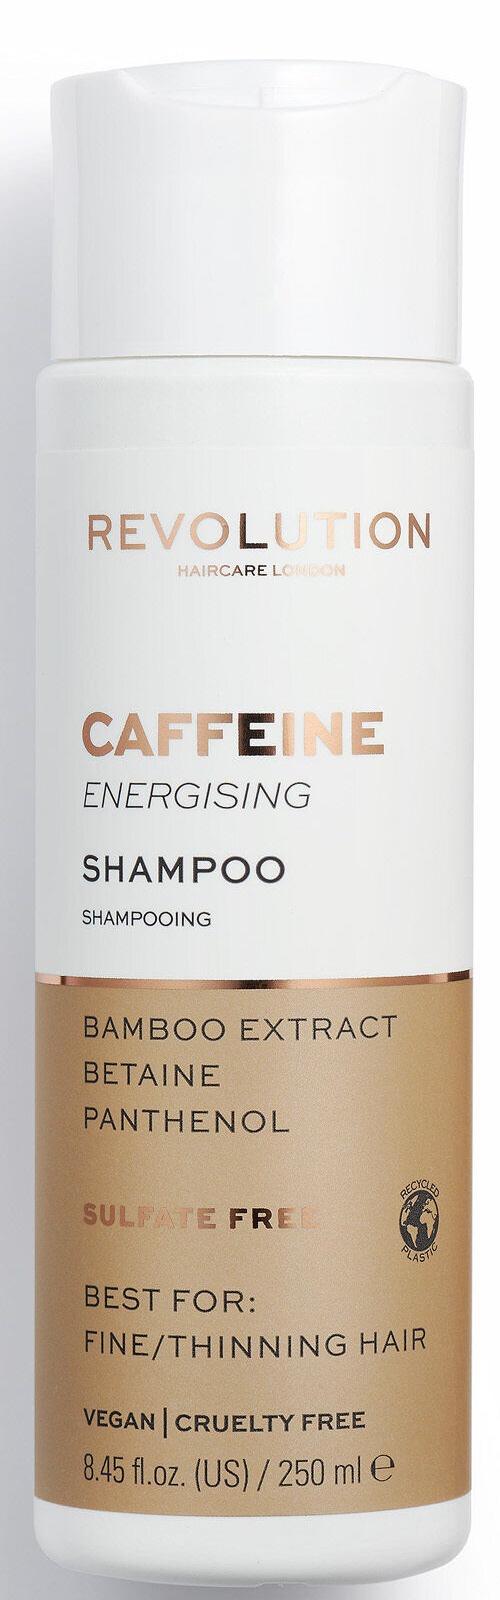 Revolution Haircare Caffeine Energising Shampoo